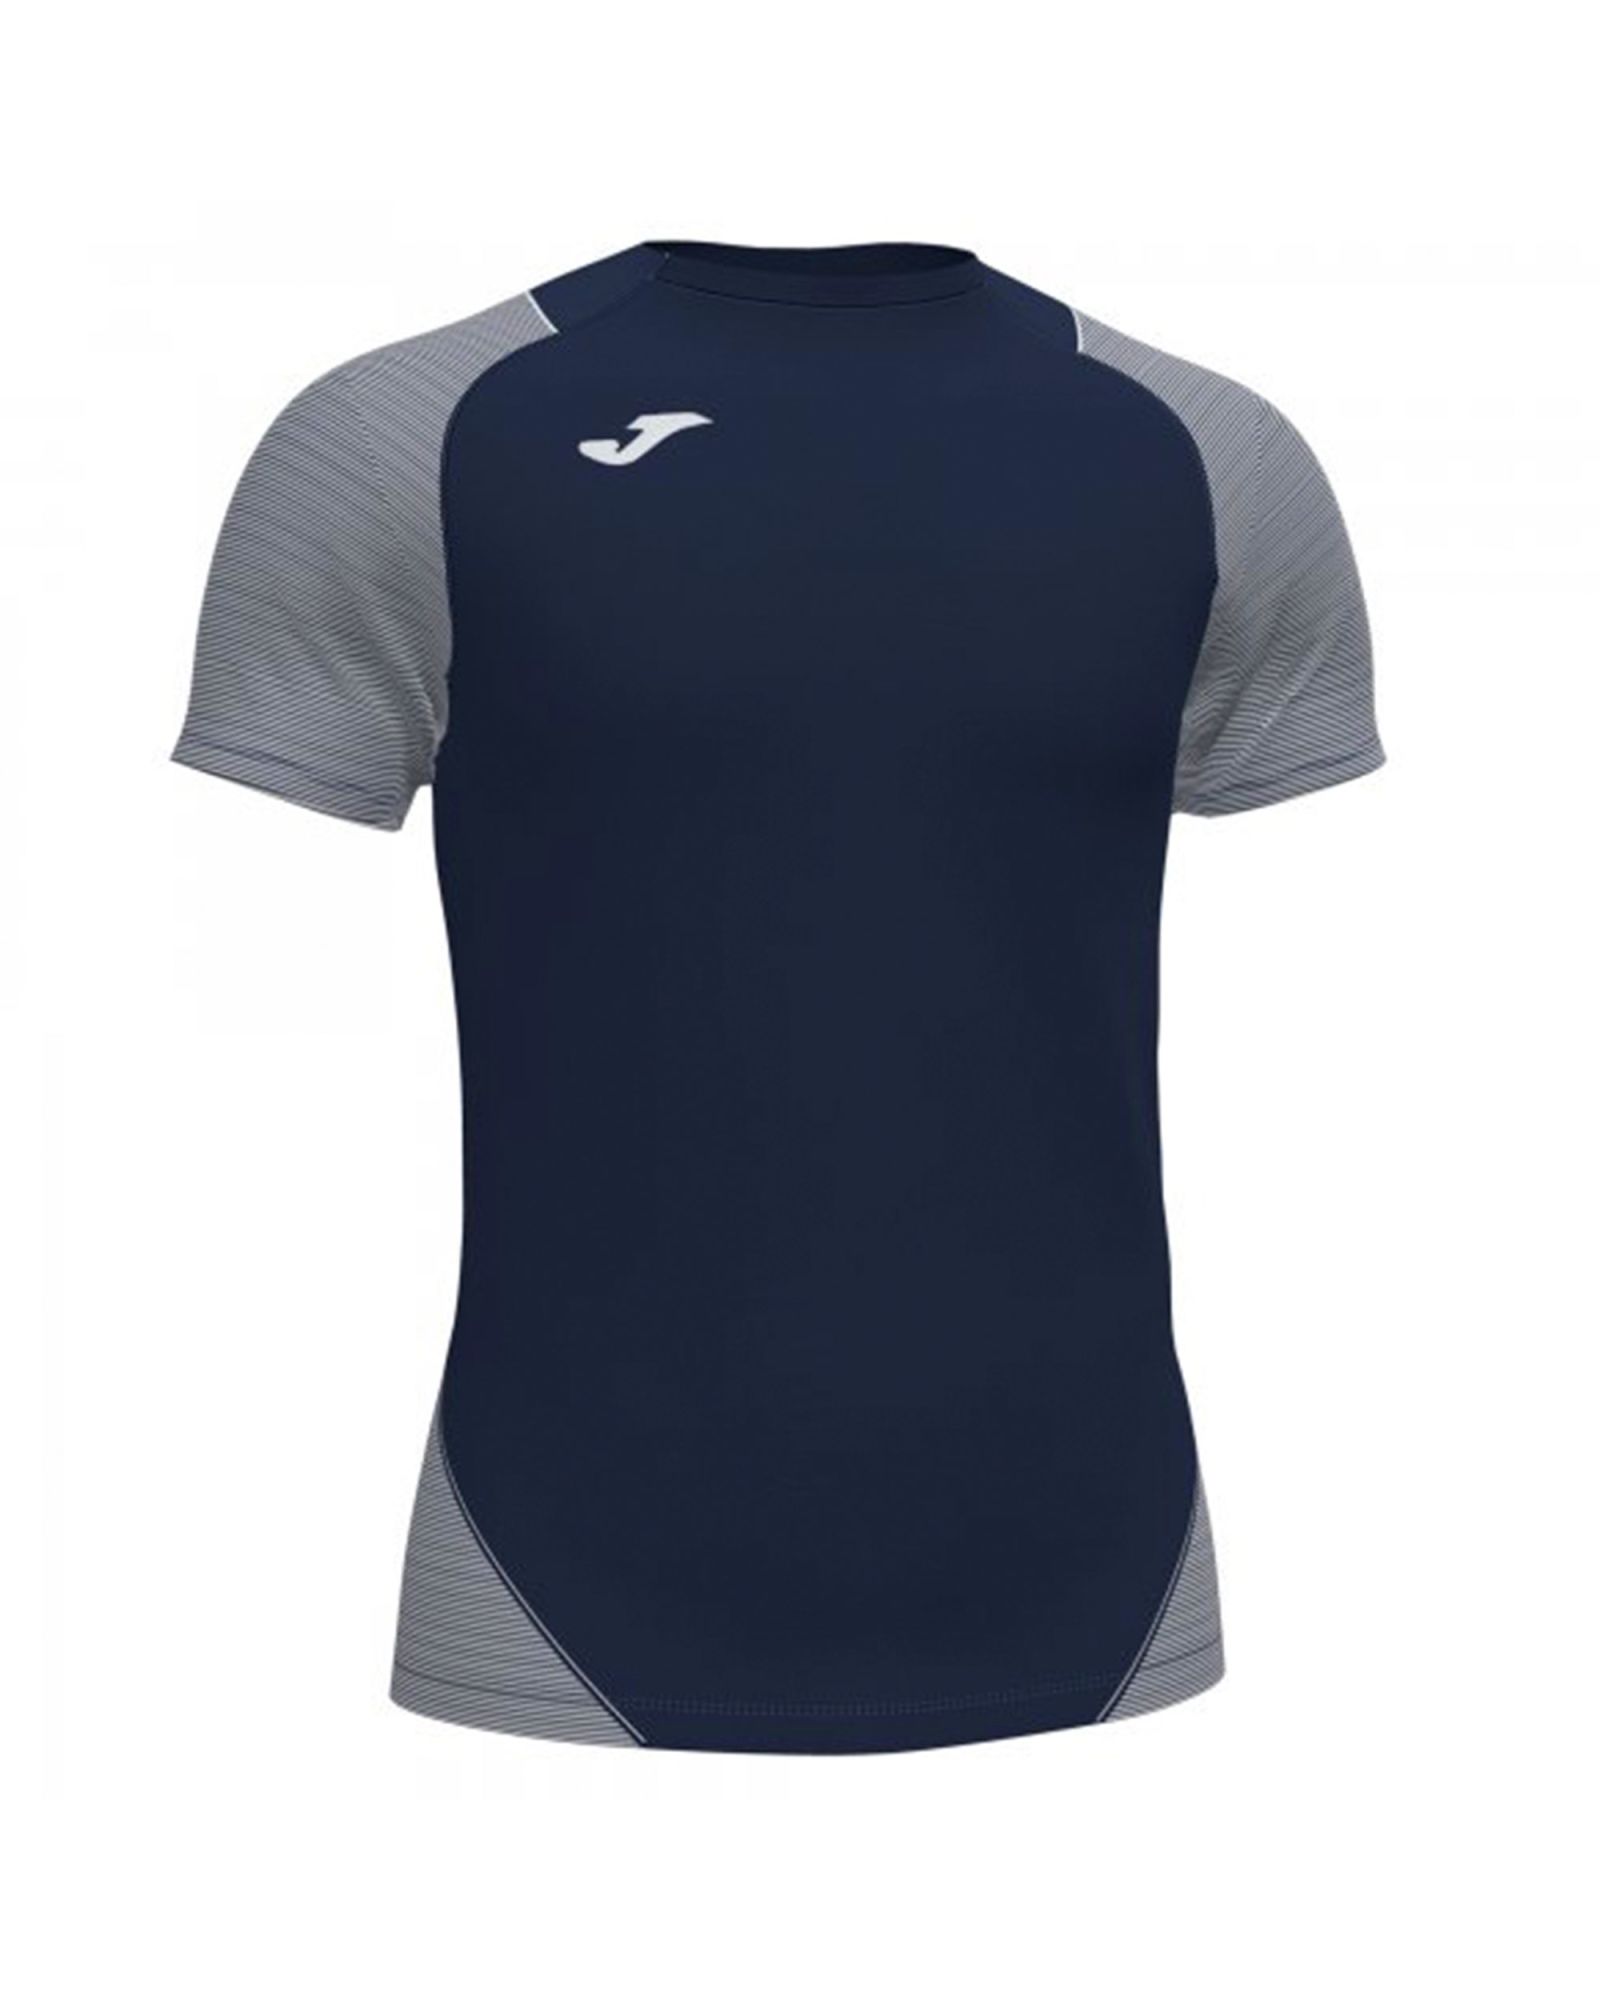 Camiseta Joma Essential II - Fútbol Factory